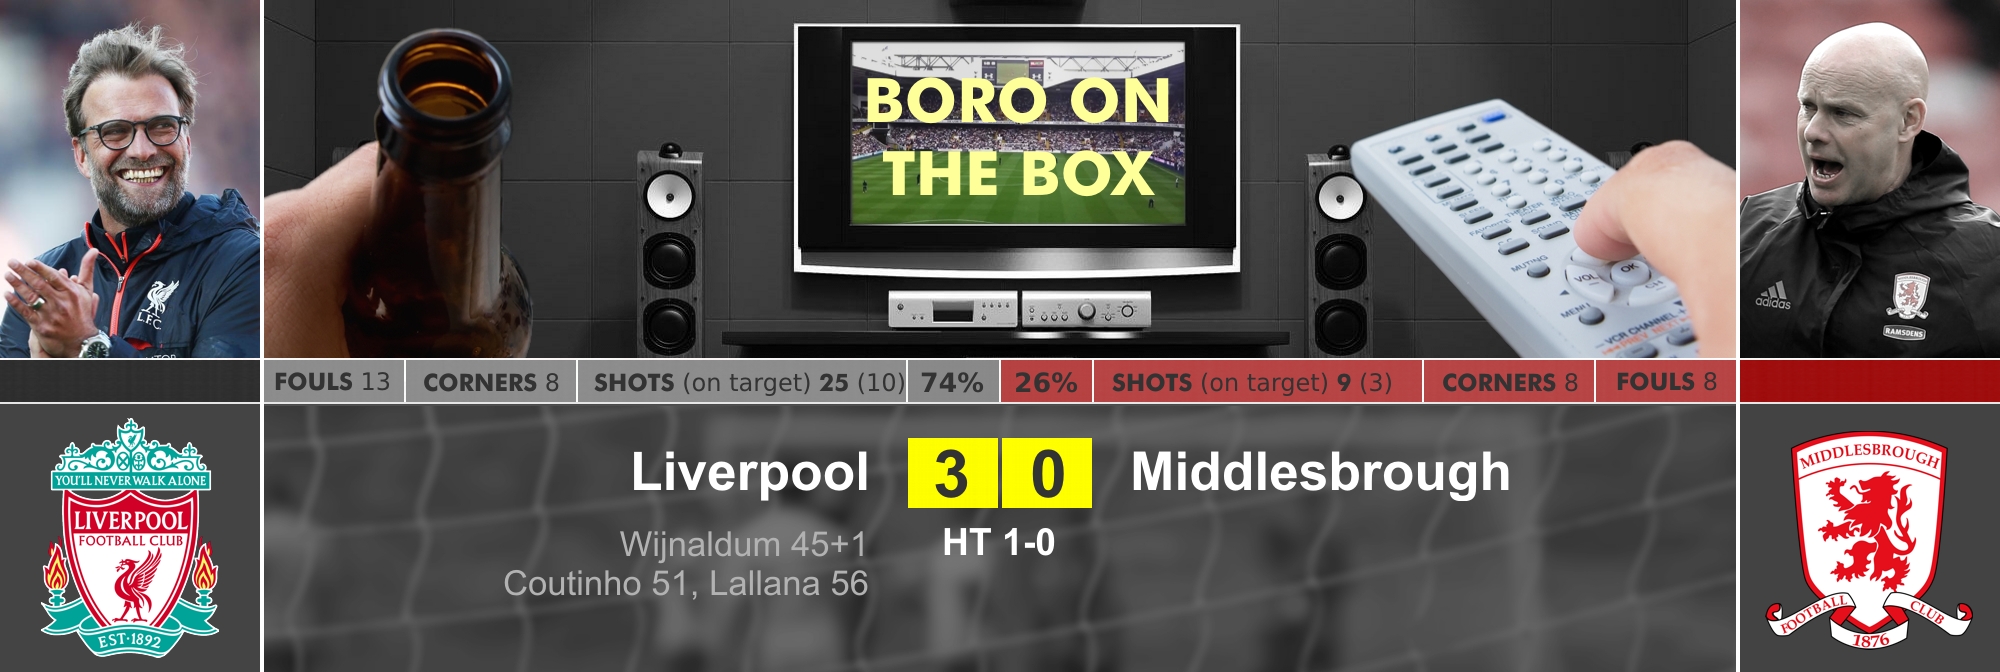 Match Report - Liverpool